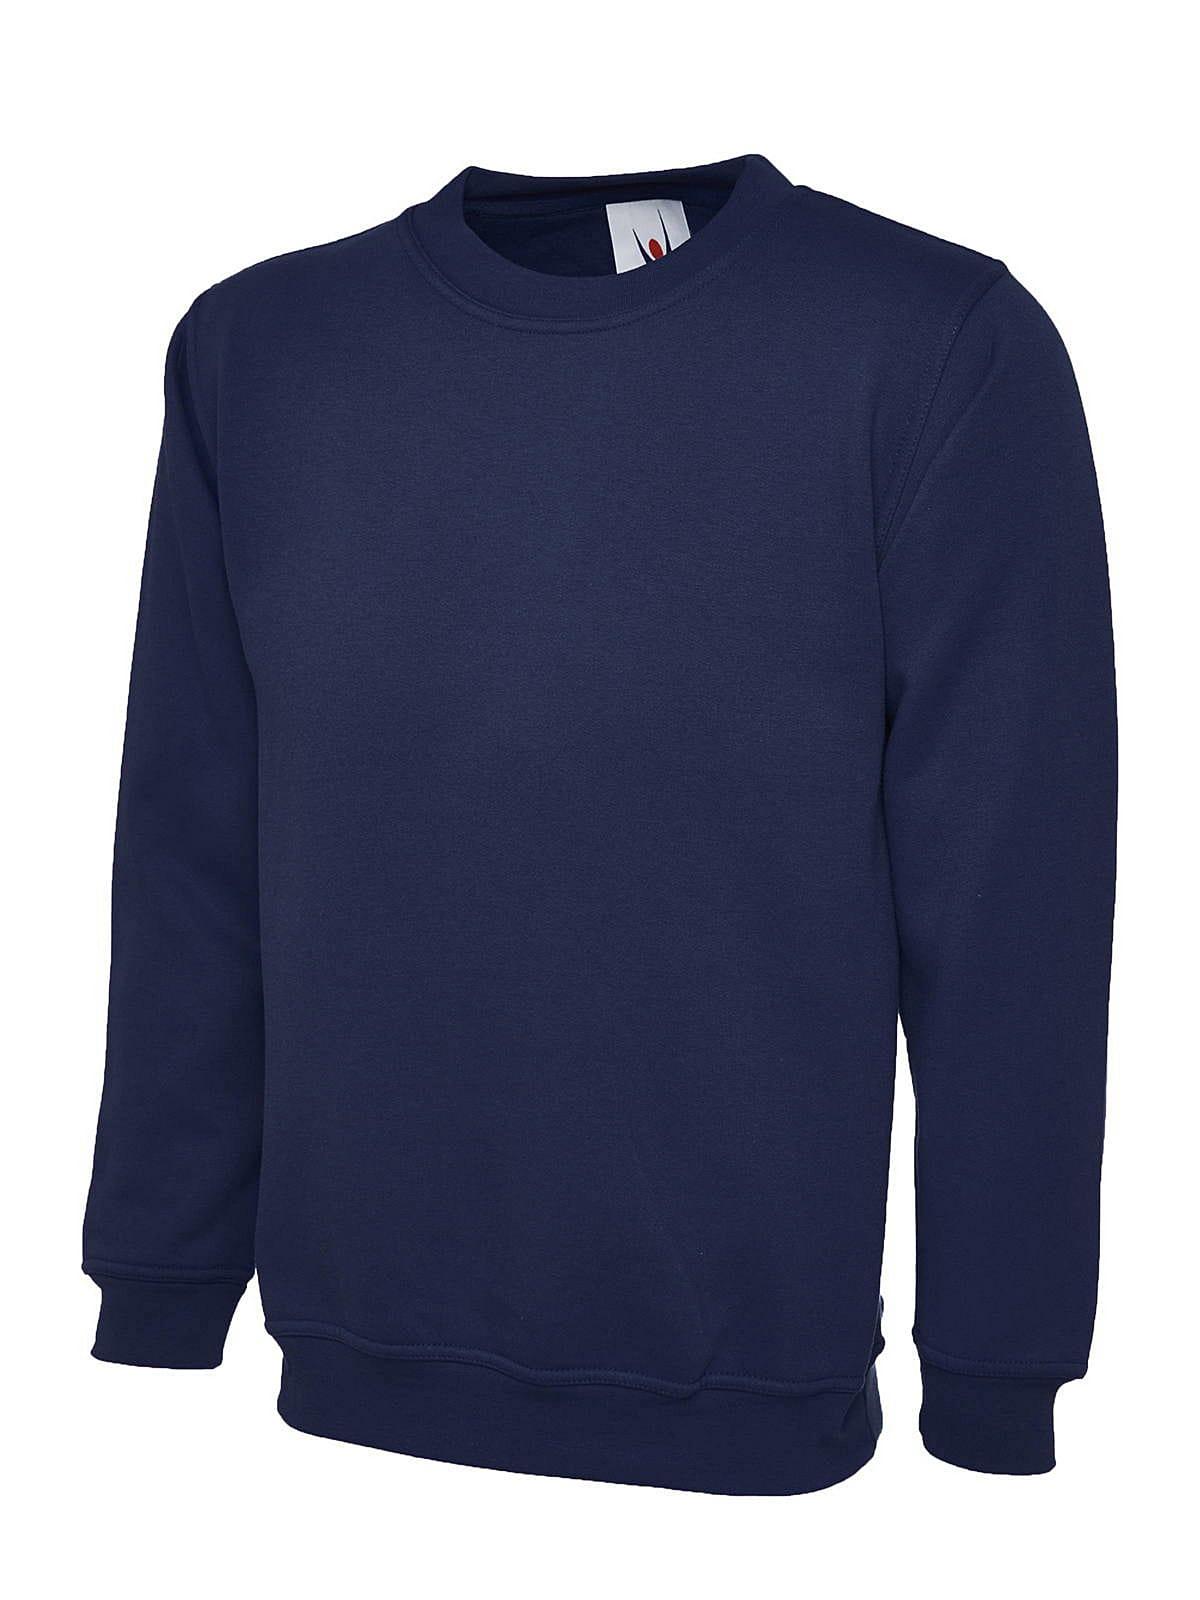 Uneek 300GSM Classic Sweatshirt in French Navy (Product Code: UC203)